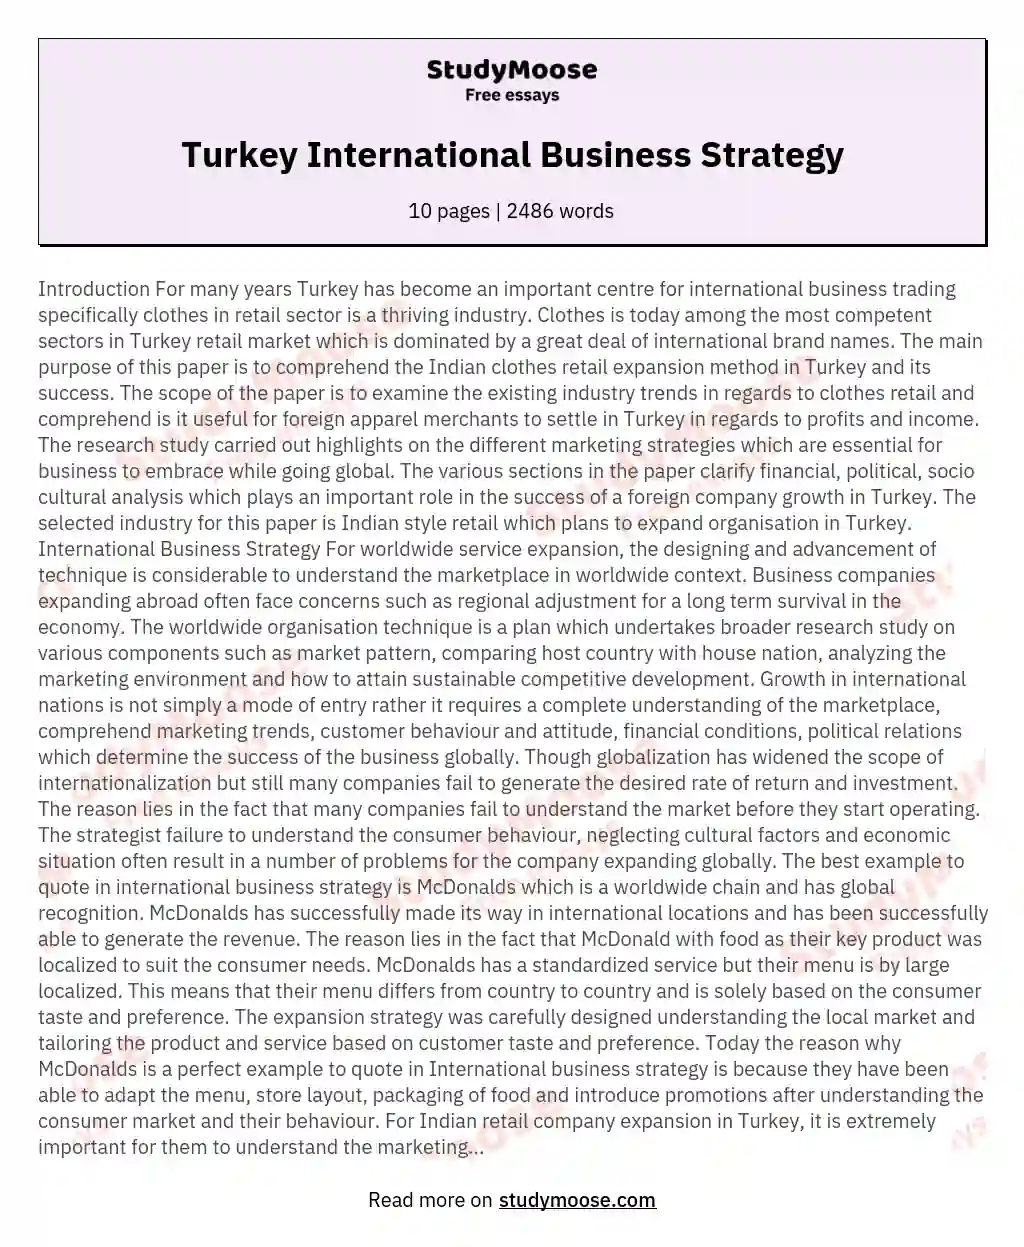 Turkey International Business Strategy essay